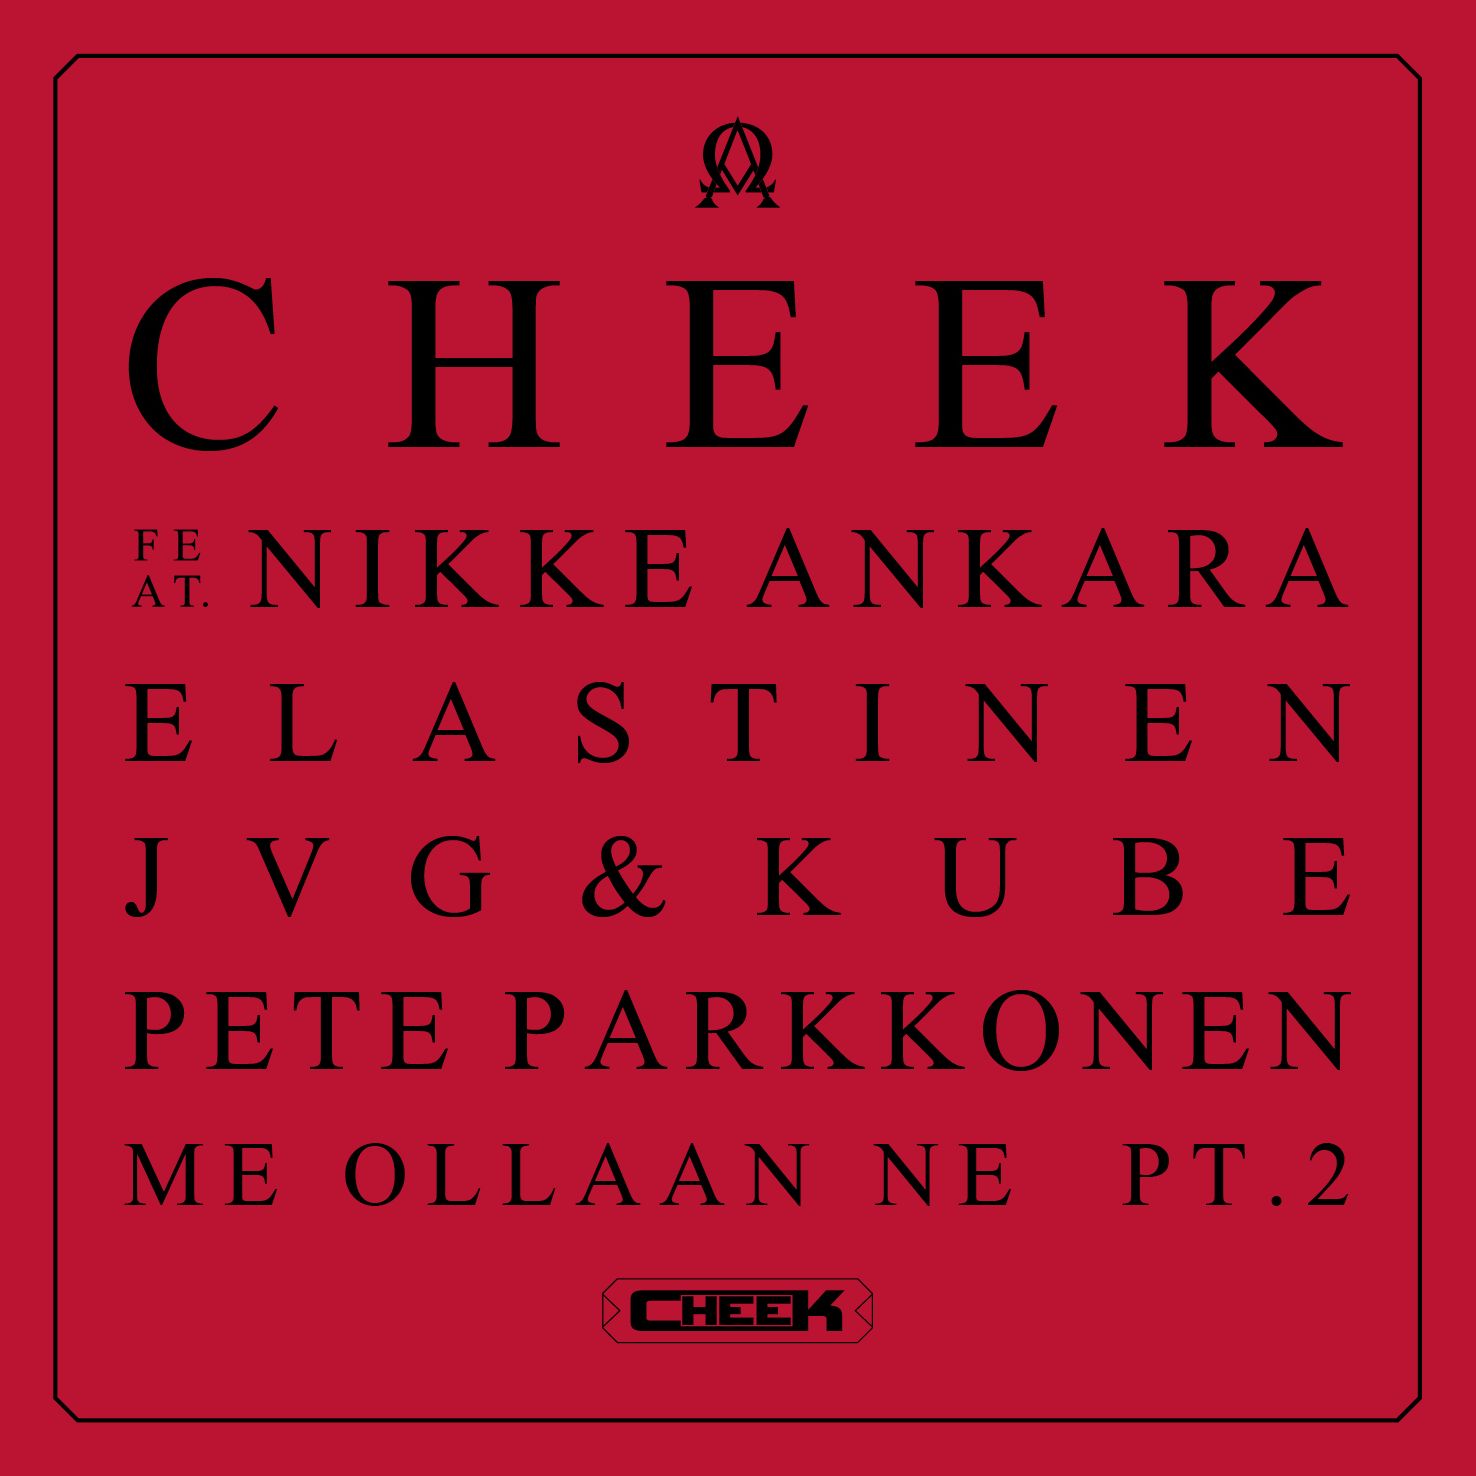 Me ollaan ne, Pt. 2 (feat. Nikke Ankara, Elastinen, JVG, Kube, Pete Parkkonen)